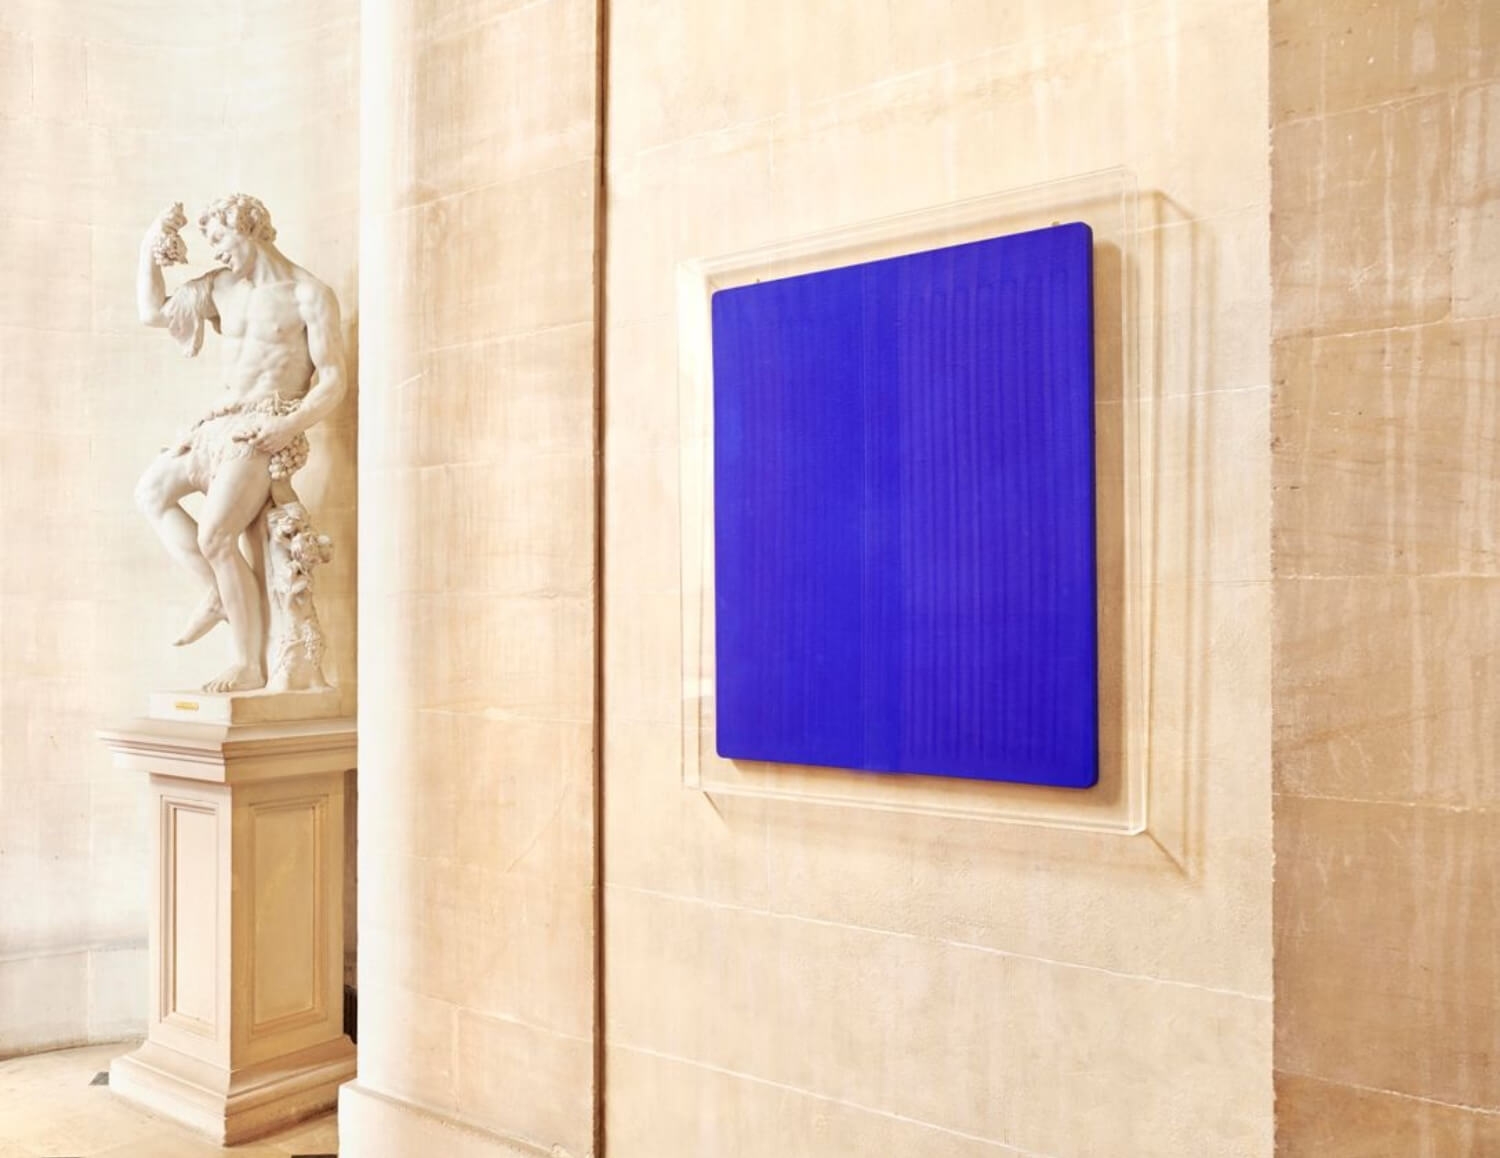 Feeling blue – Yves Klein at Blenheim Palace